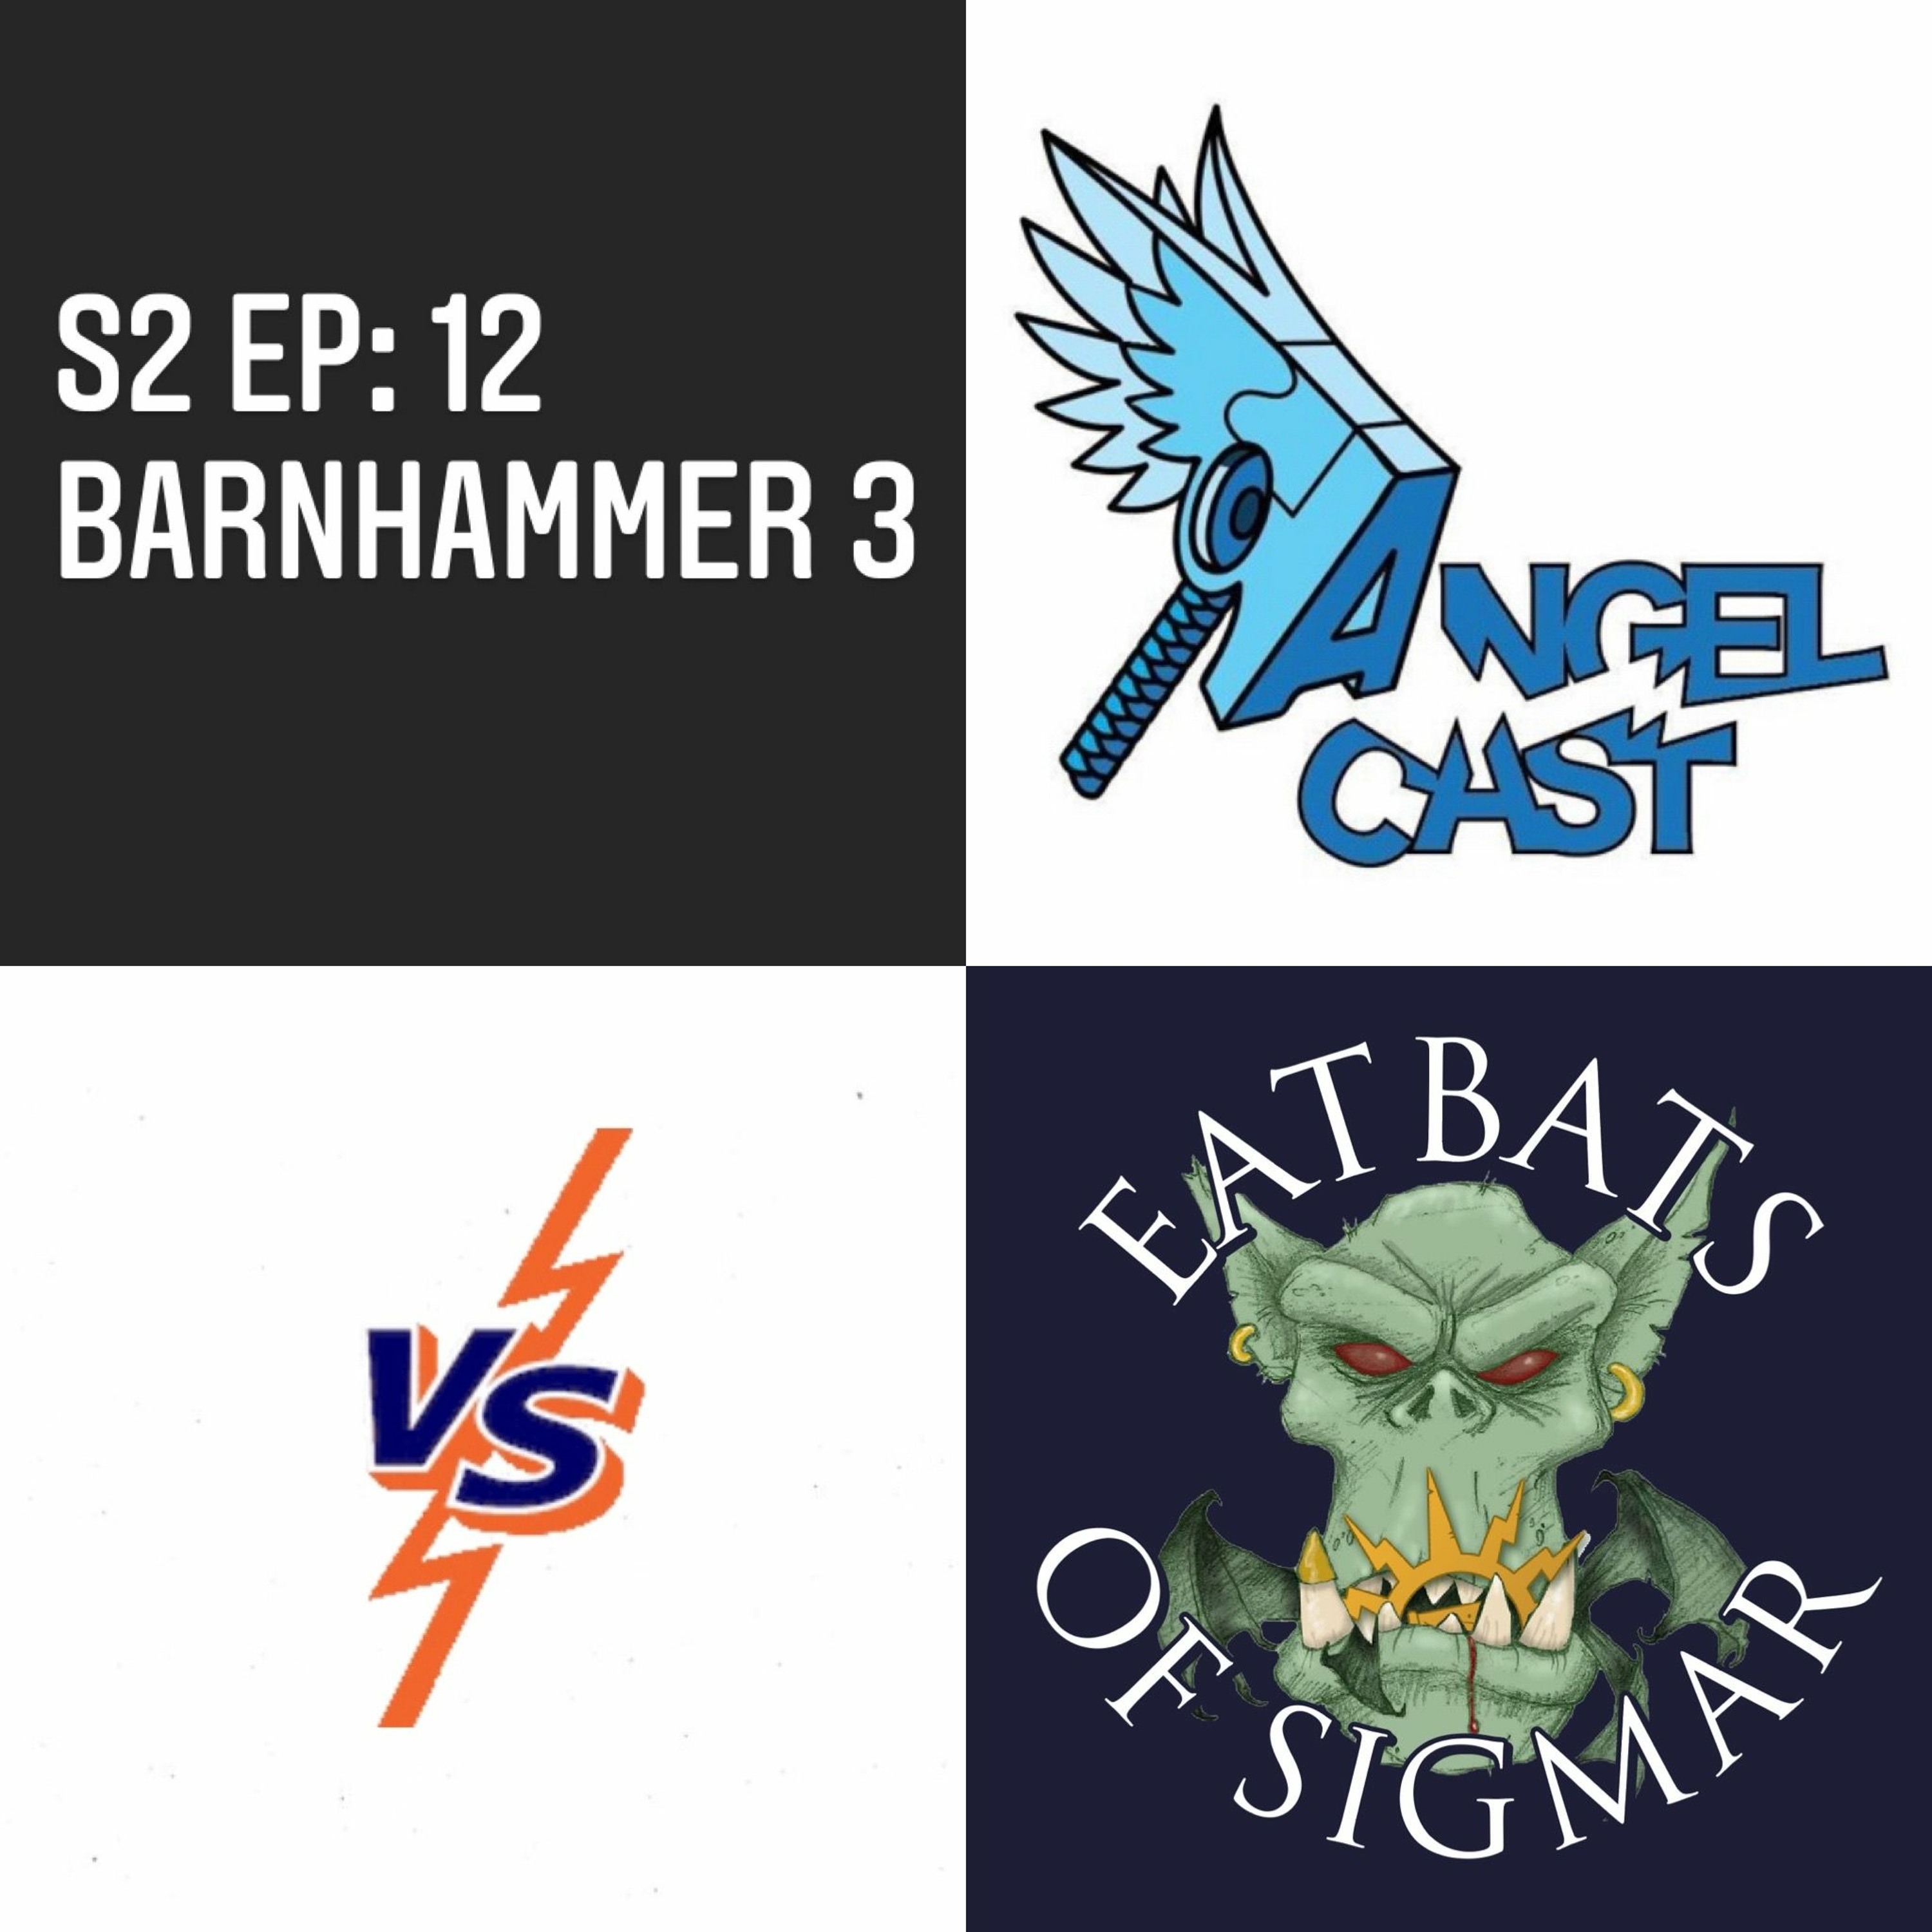 S2 EP12: Barnahmmer 3, Path to Glory and Quarantine hobby